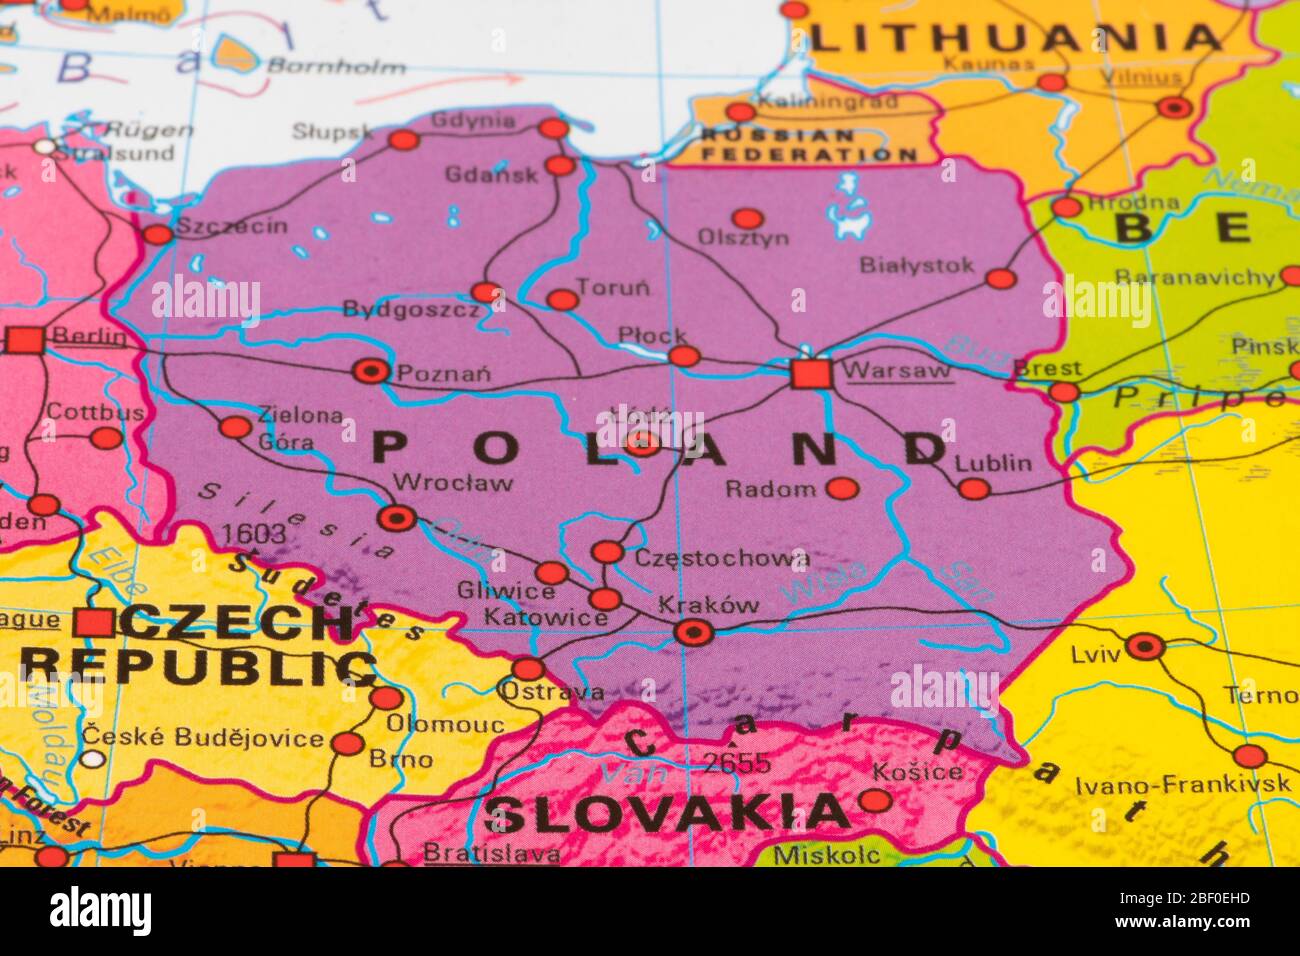 Europe, map of Poland Stock Photo